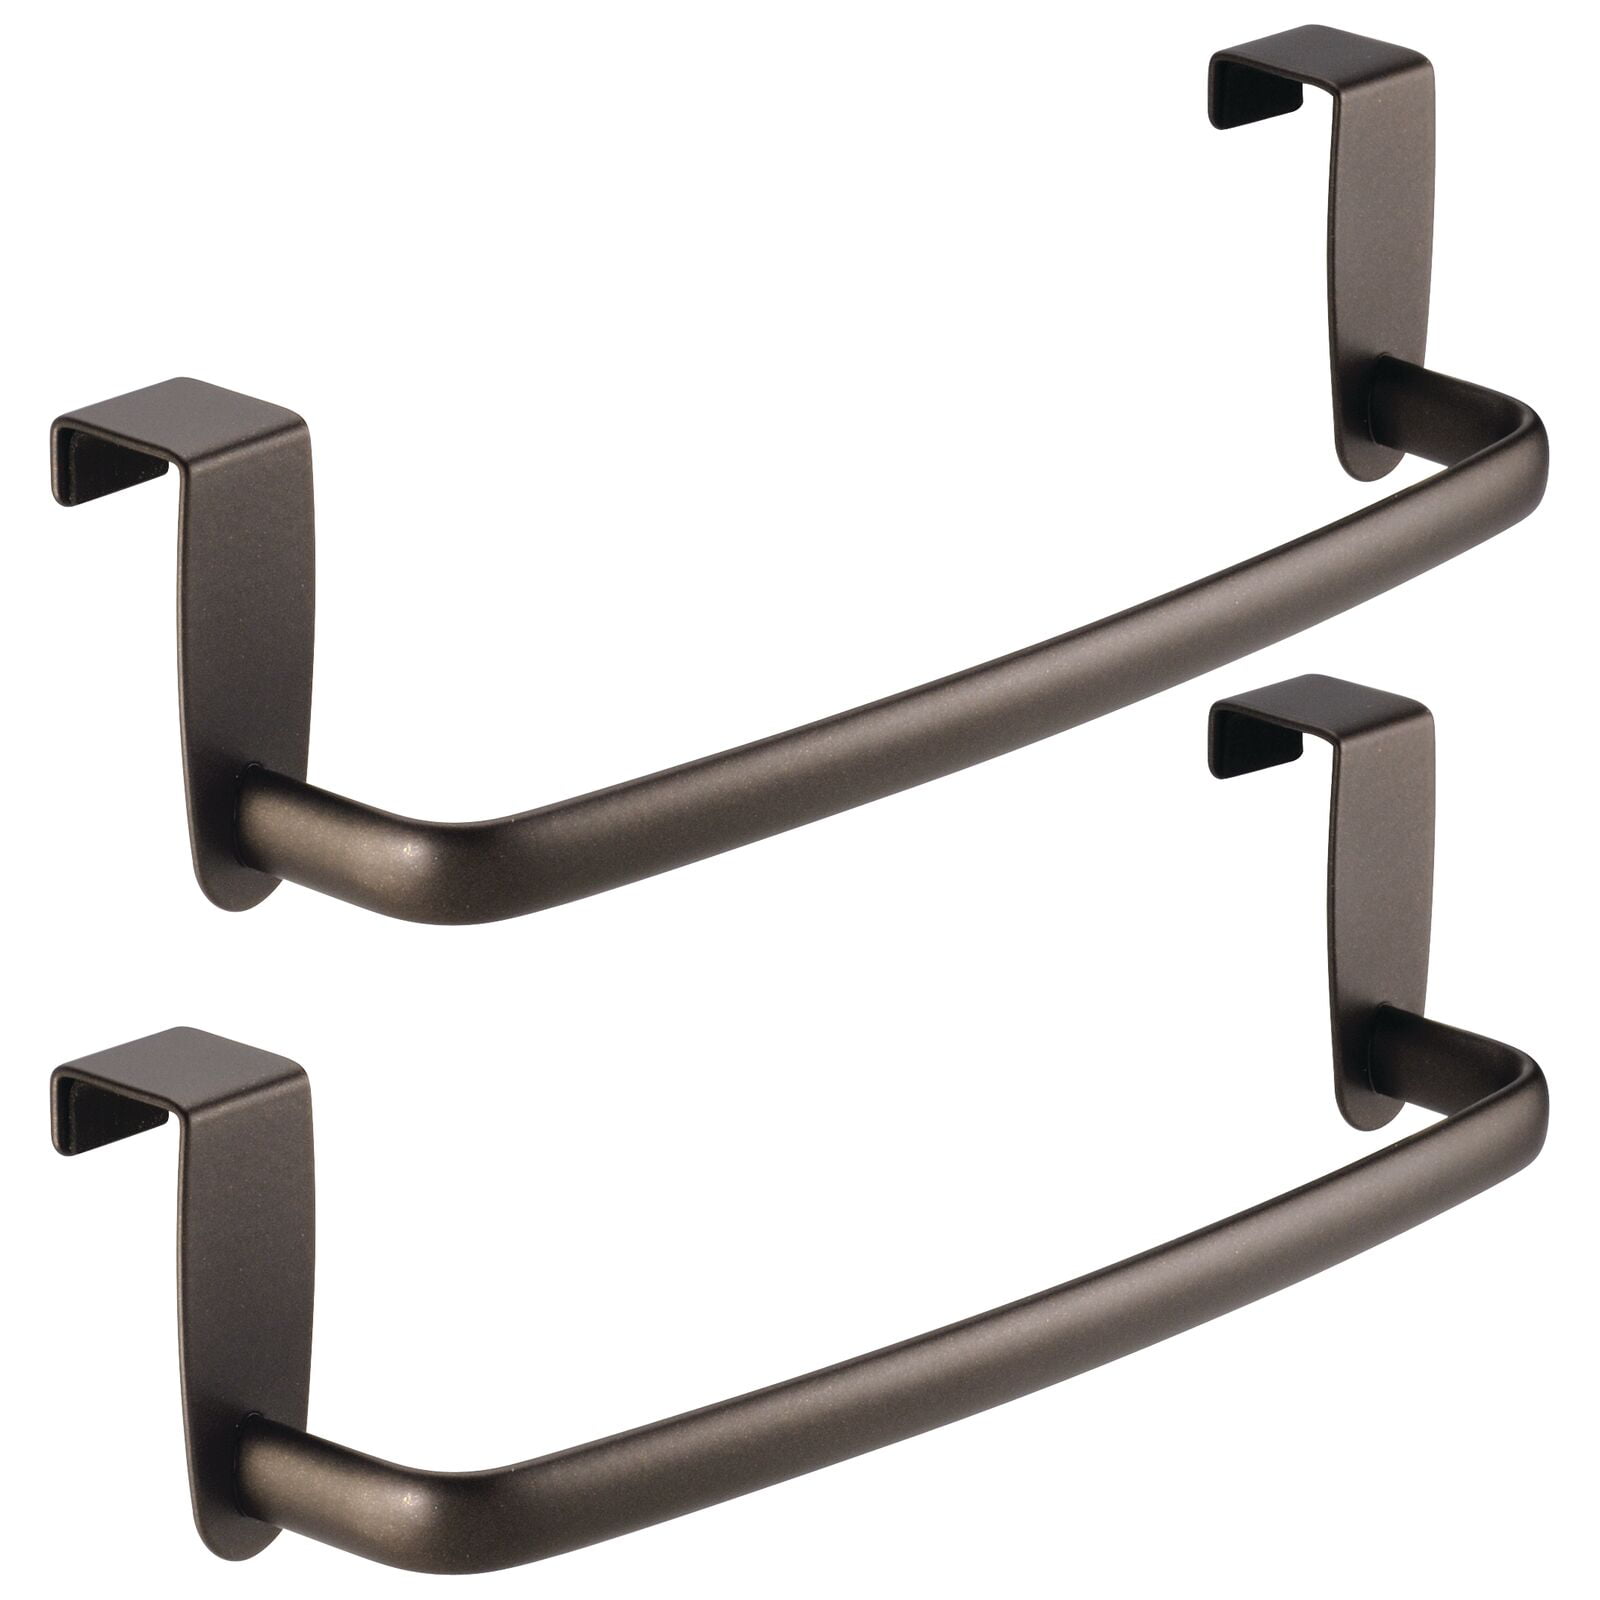 InterDesign Axis Over-the-Cabinet Metallic Dish Towel Holder Pack of 2 Bronze 